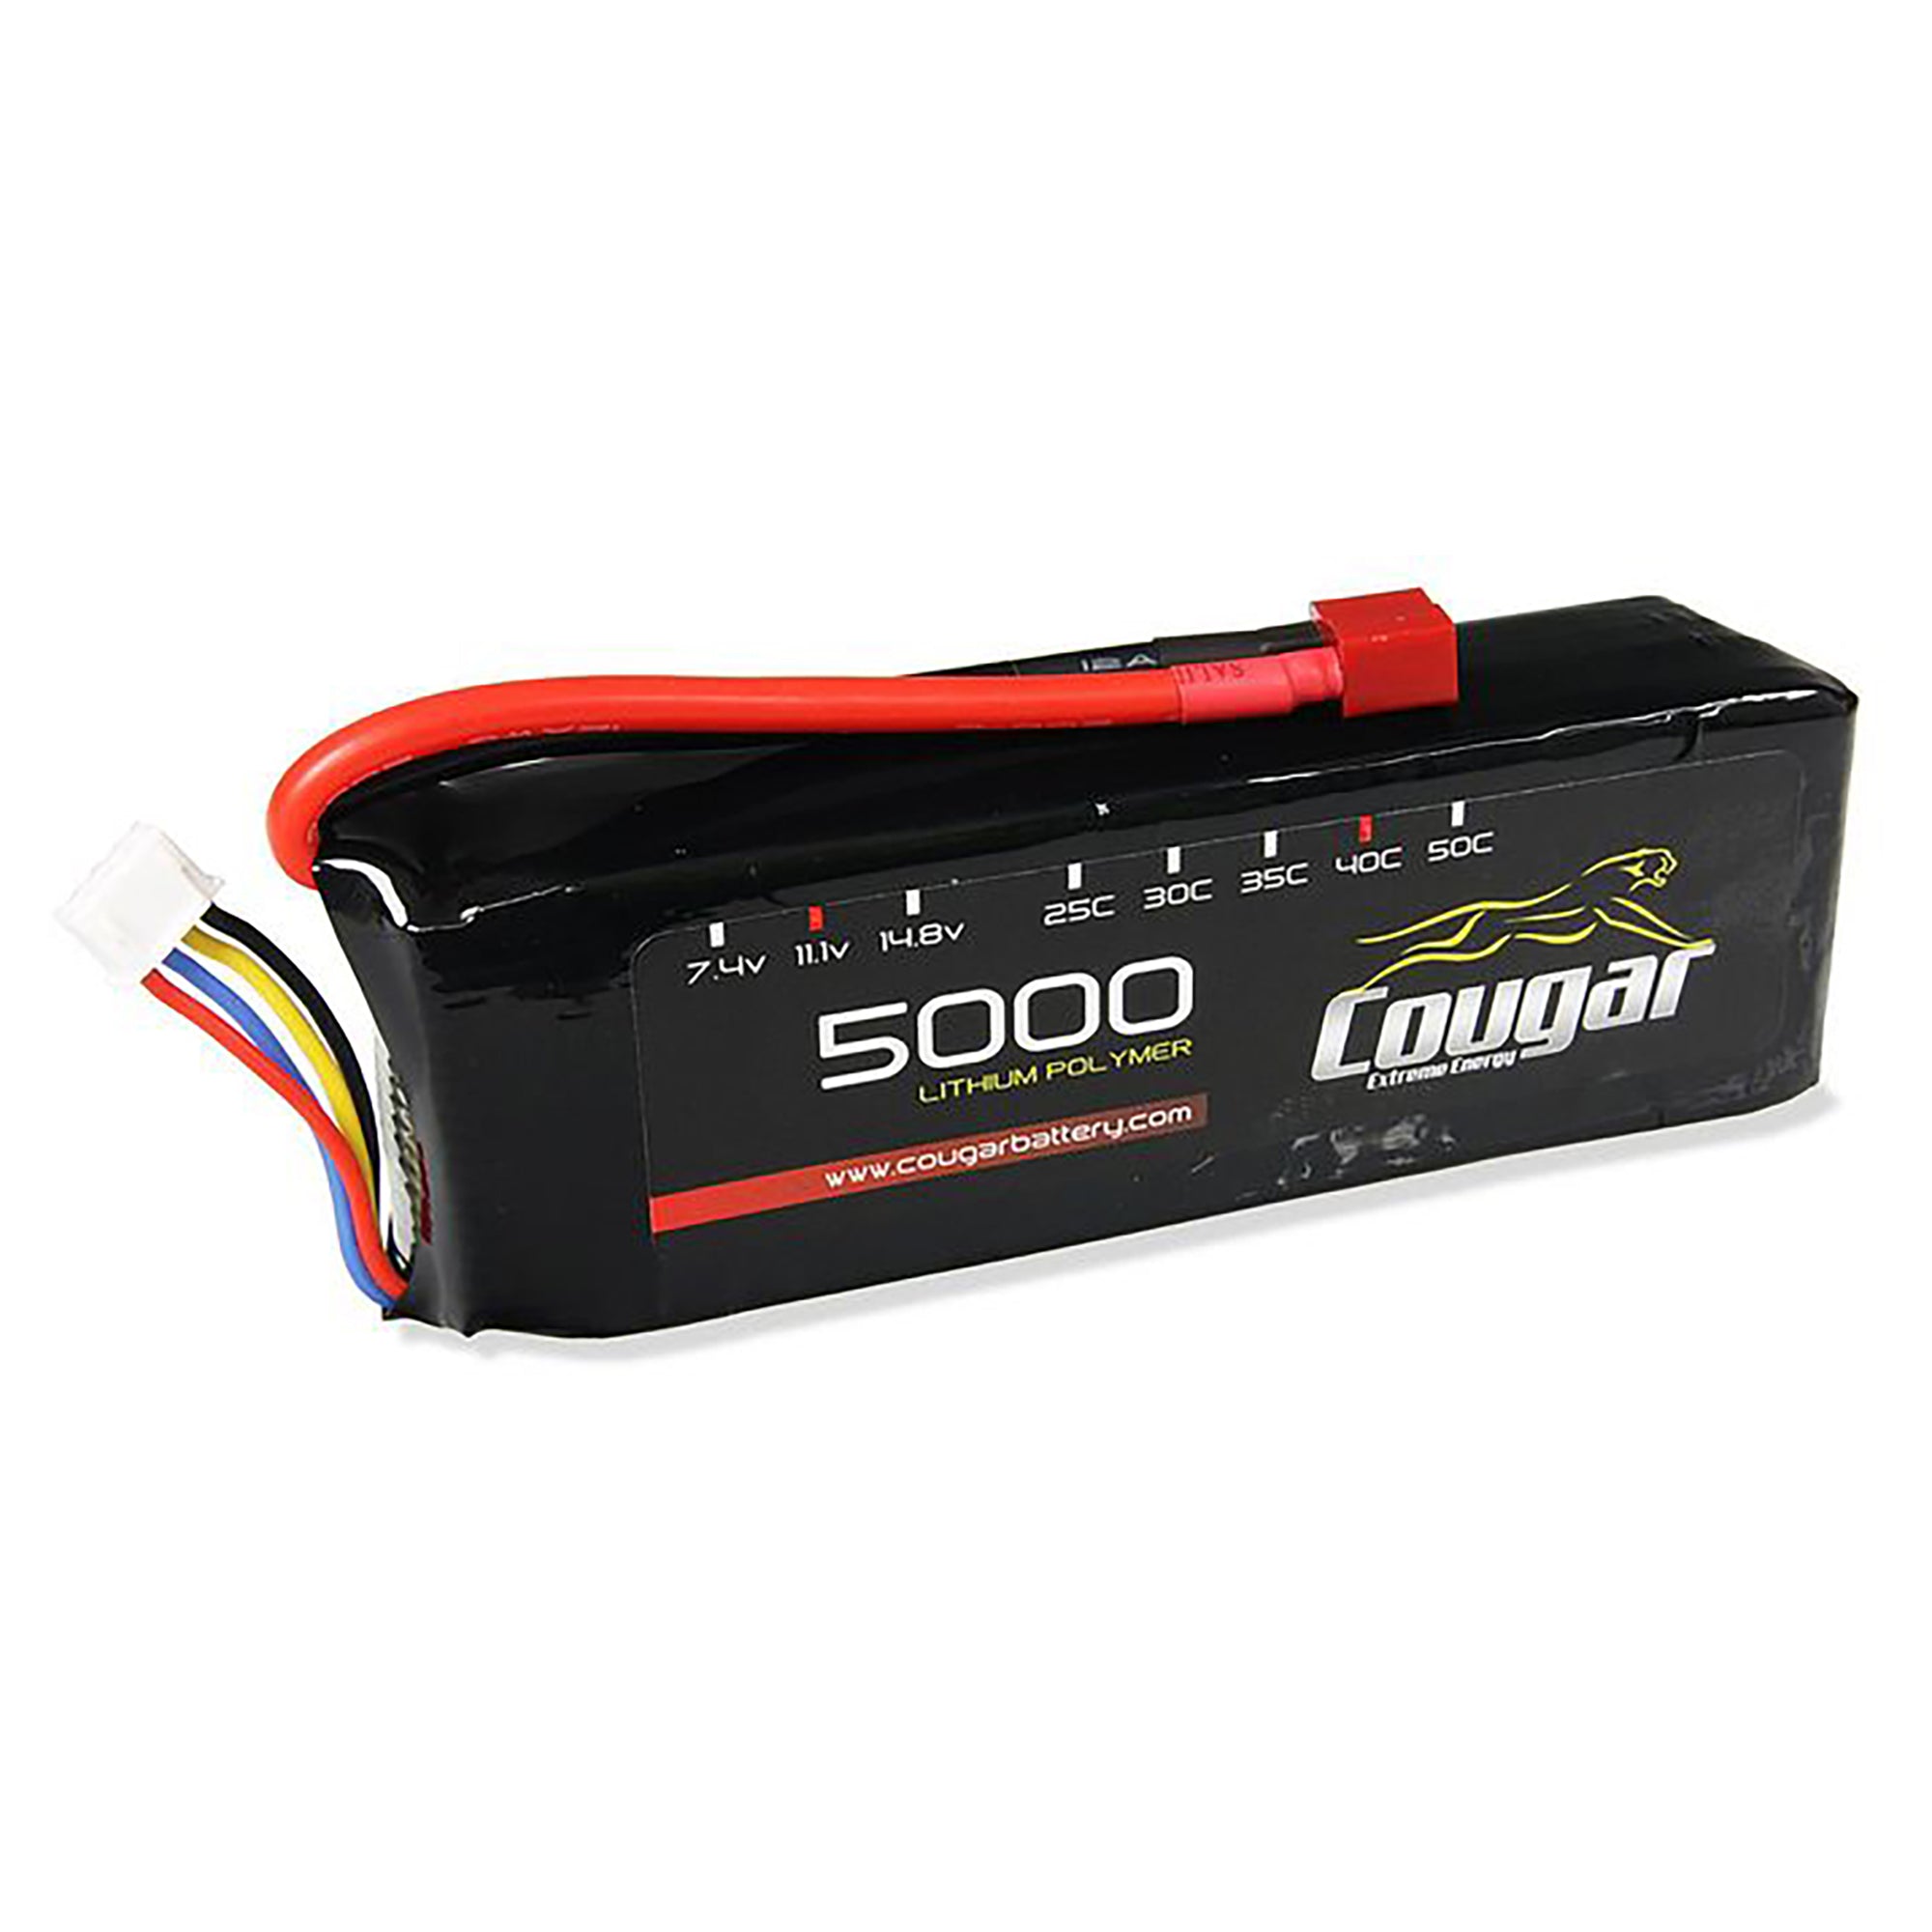 Cougar 5000mAh 11.1v 3S 40C Soft Case LiPo Battery